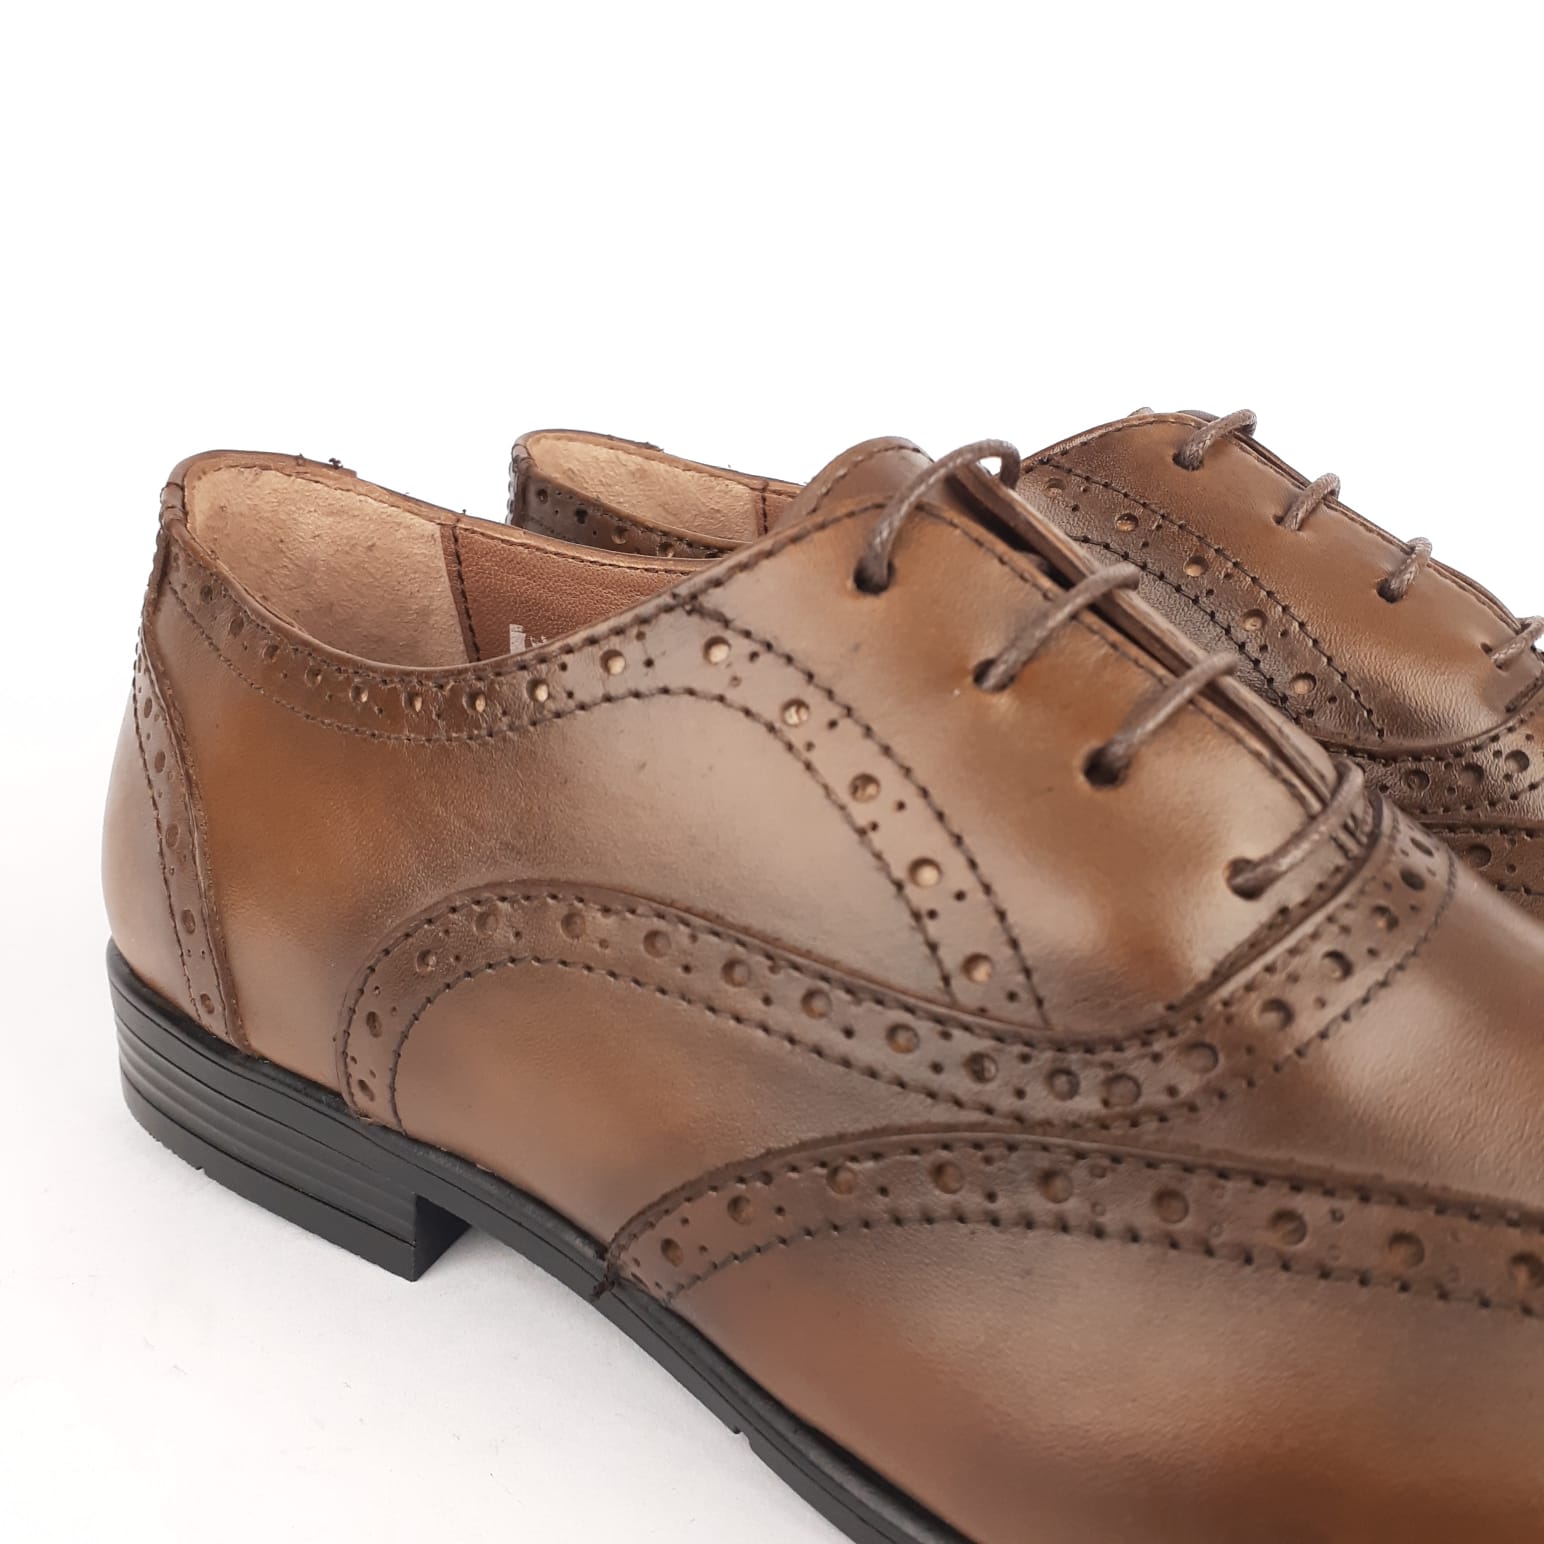 891 Chaussure en cuir Marron vintage